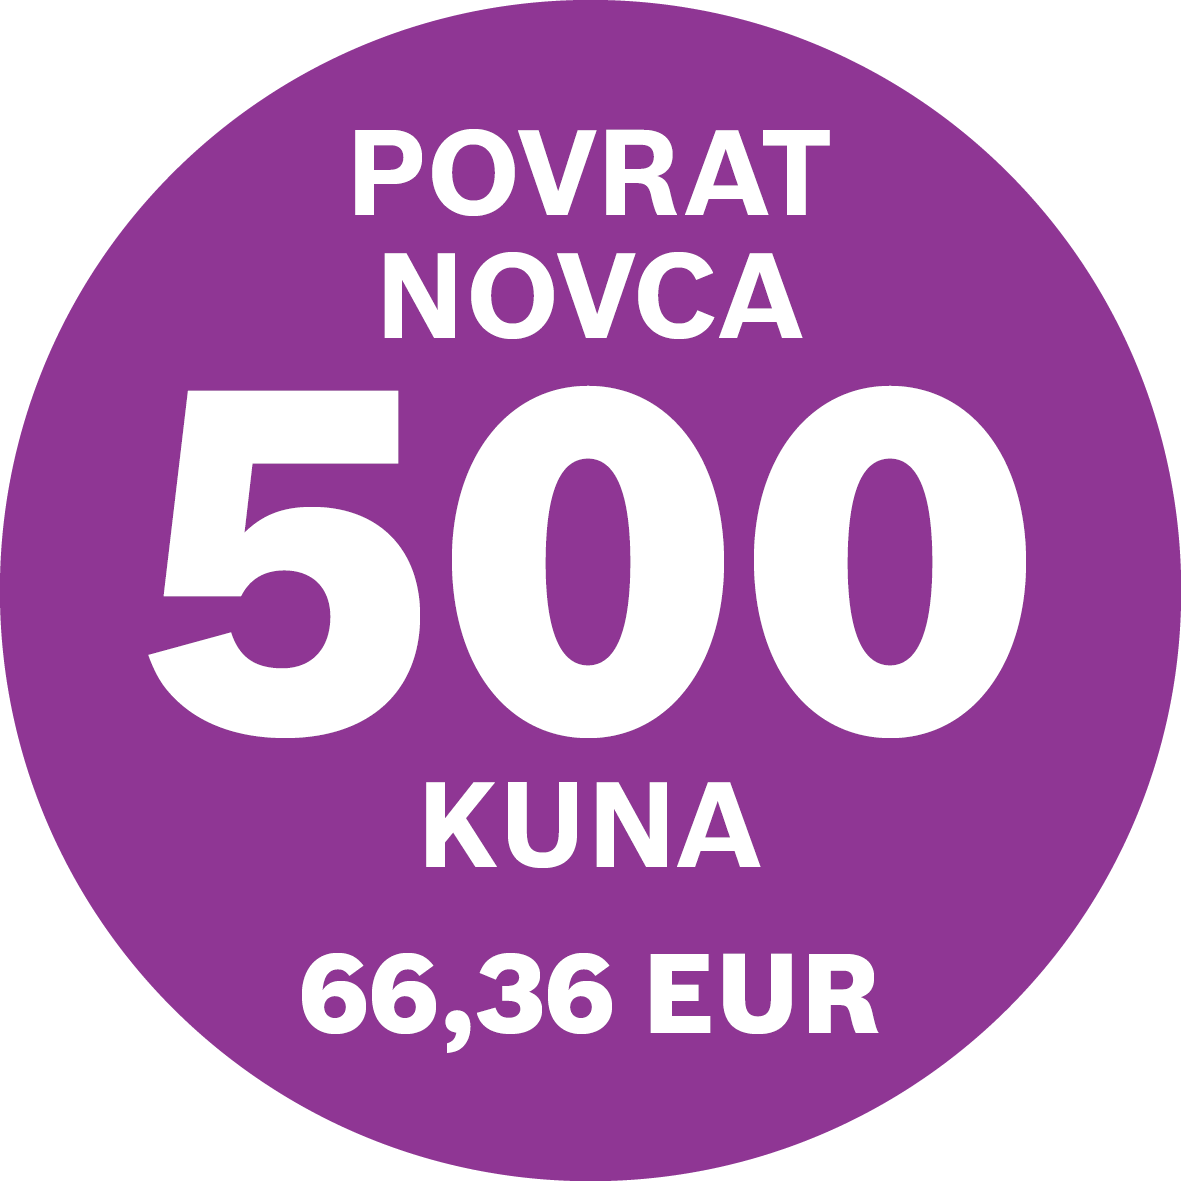 bosch-povrat-novca-500-kuna-na-pecnice-_.png